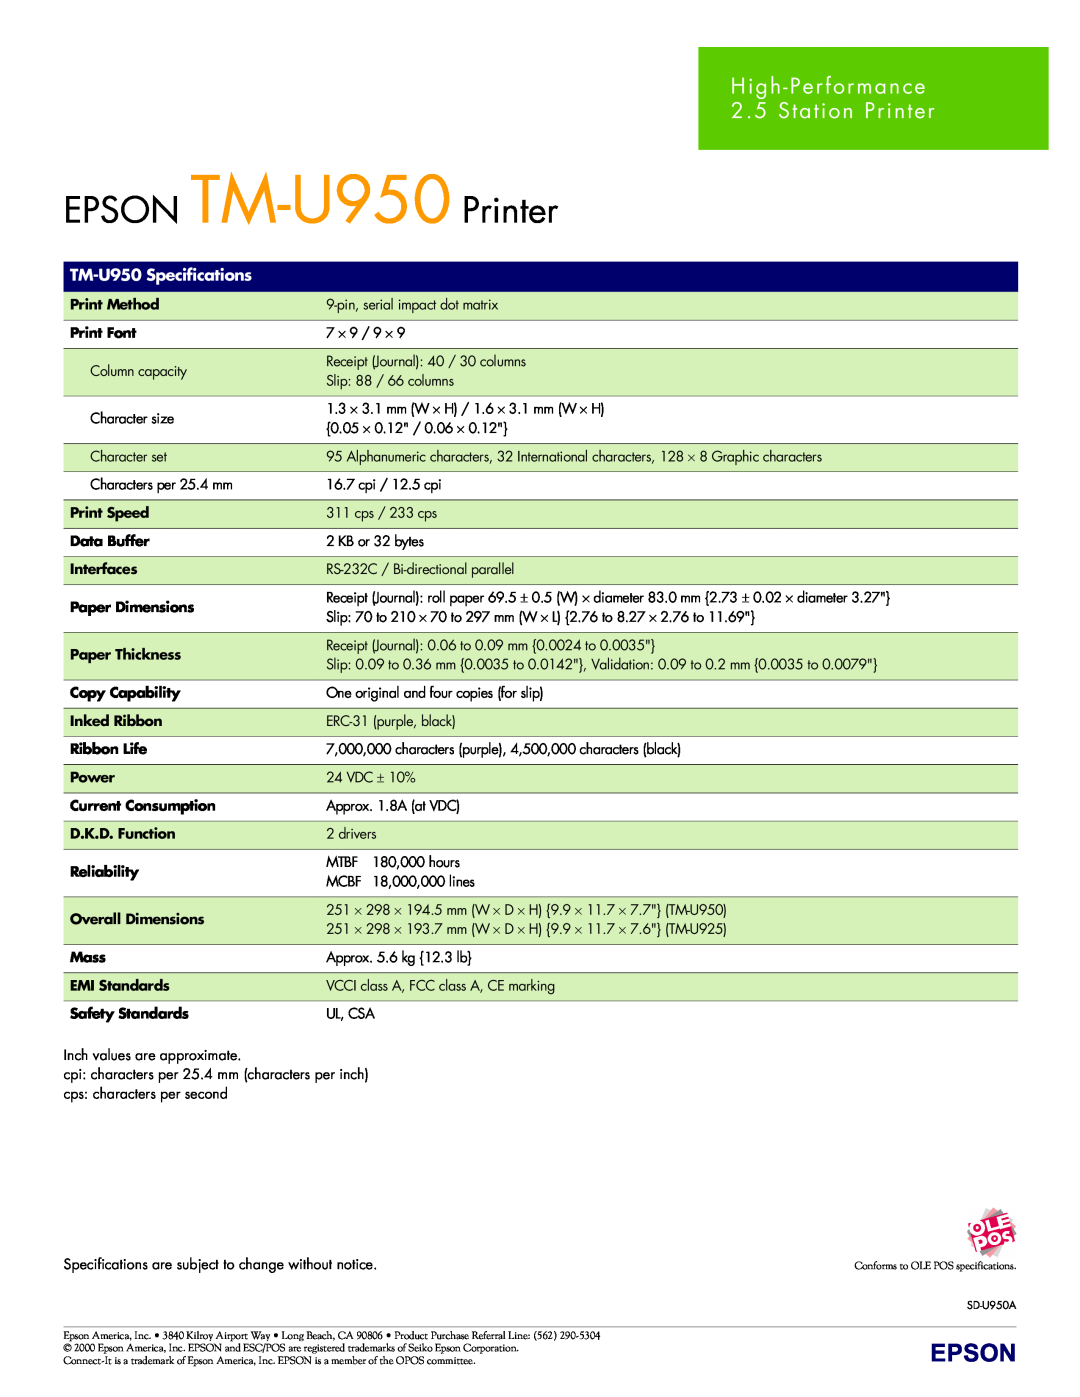 Epson manual EPSON TM-U950 Printer, High-Per formance 2.5 Station Printer, TM-U950 Specifications 